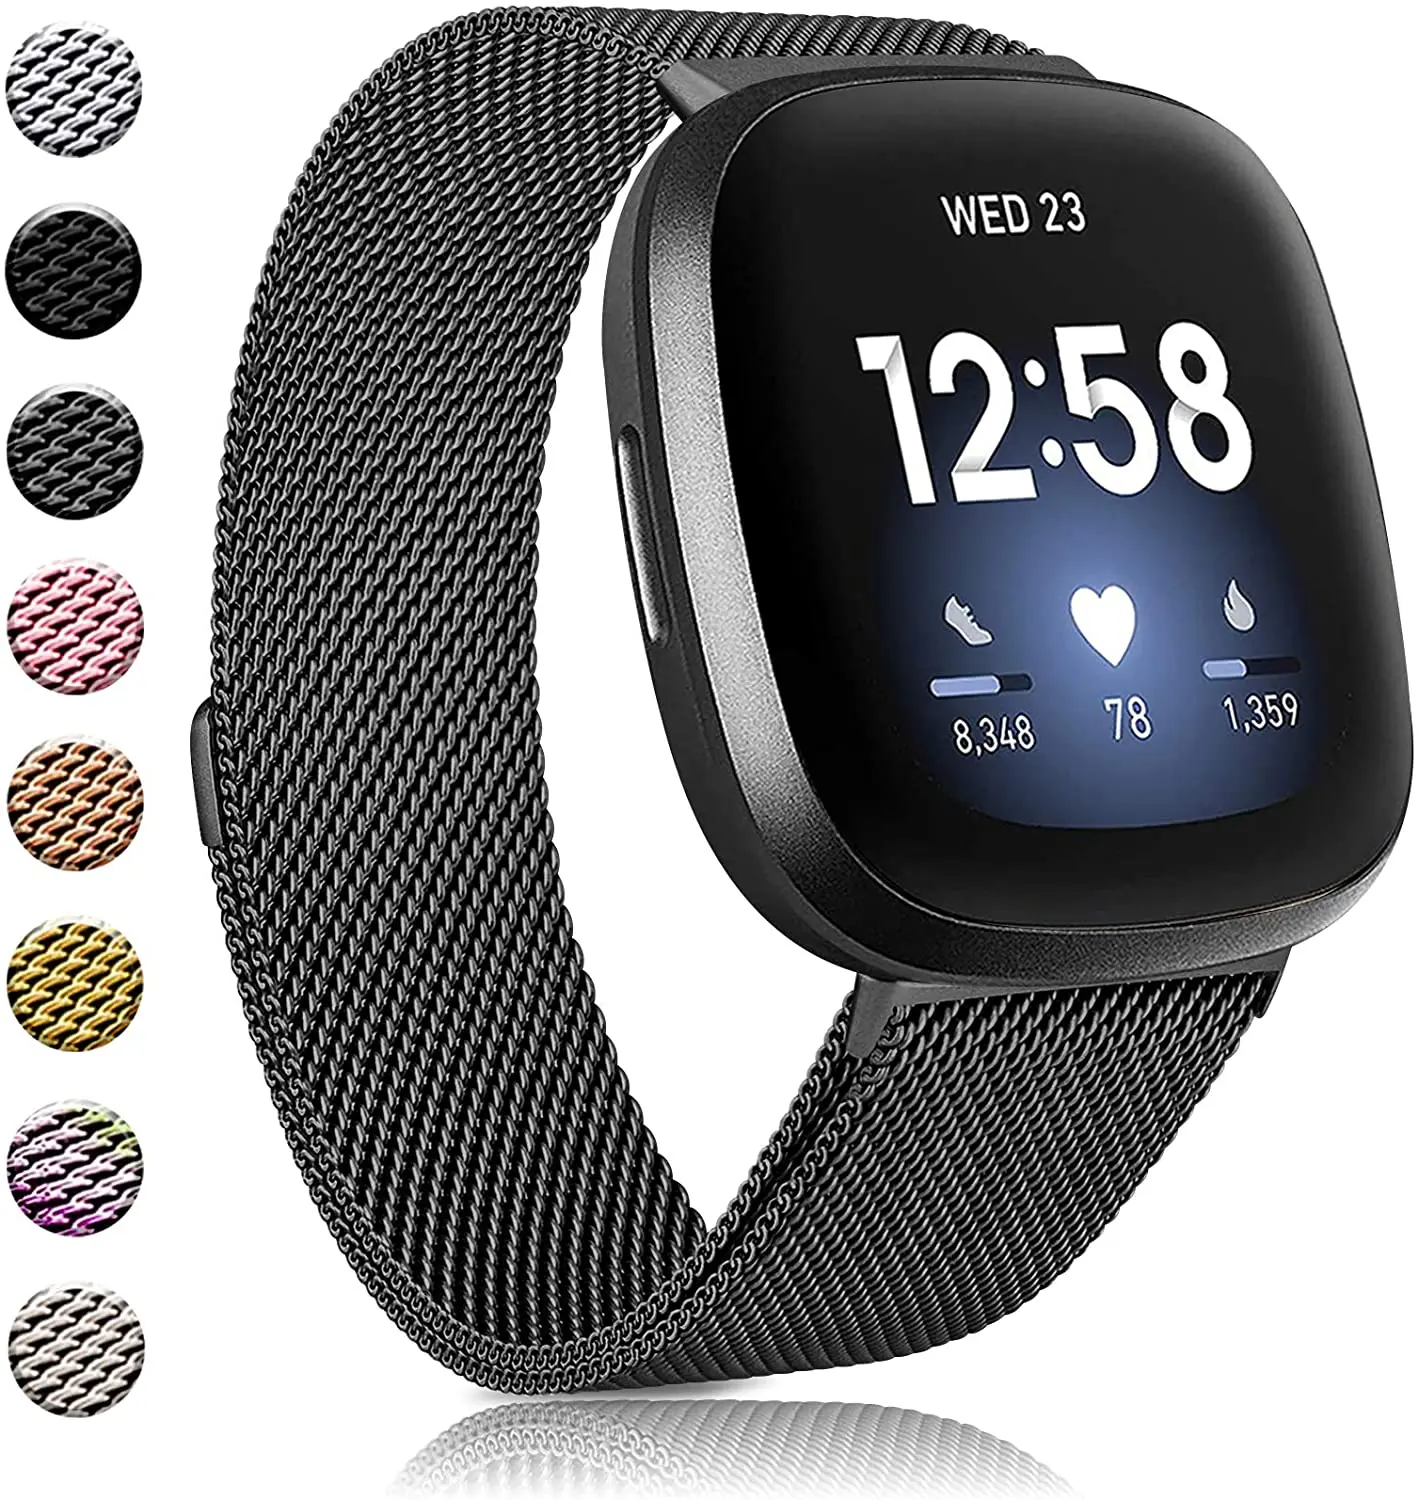 Milanese kayış Fitbit versa için 3 Bant Sense / Lite Manyetik Döngü watchband Paslanmaz Çelik metal Bilezik Fitbit versa 2 bant